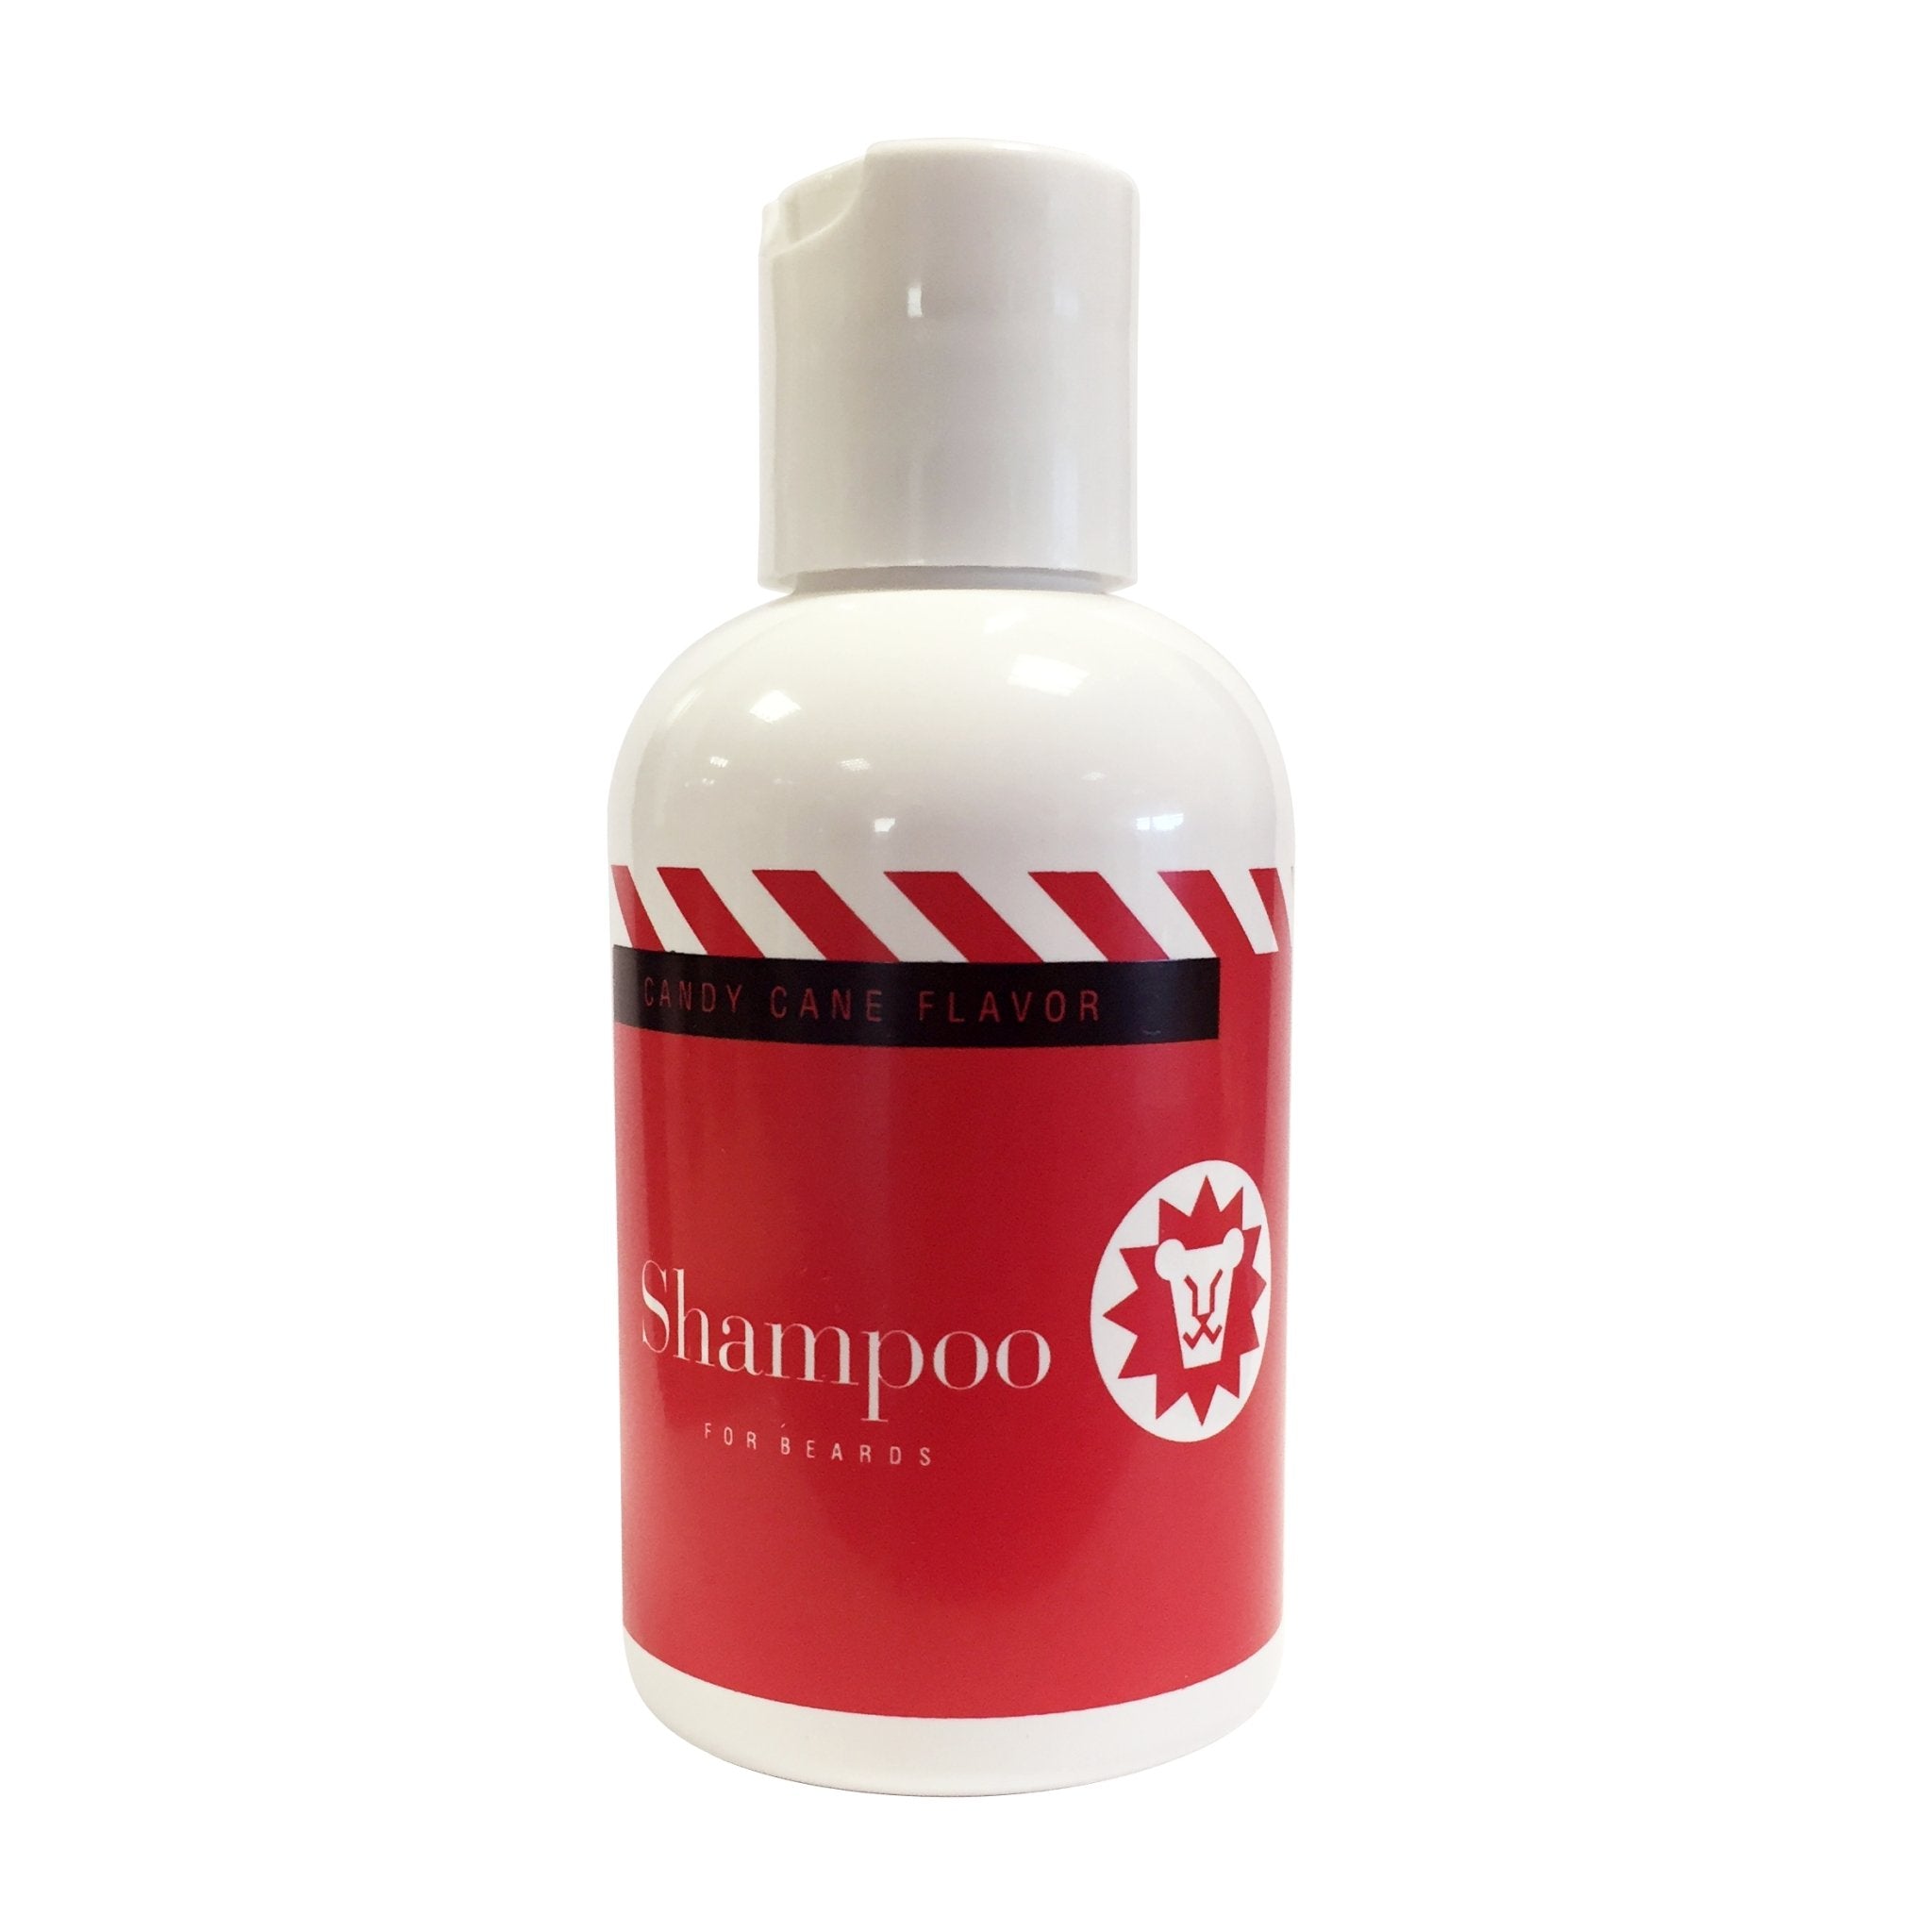 Beardsley Ultra Shampoo for Beards - Candy Cane 118ml